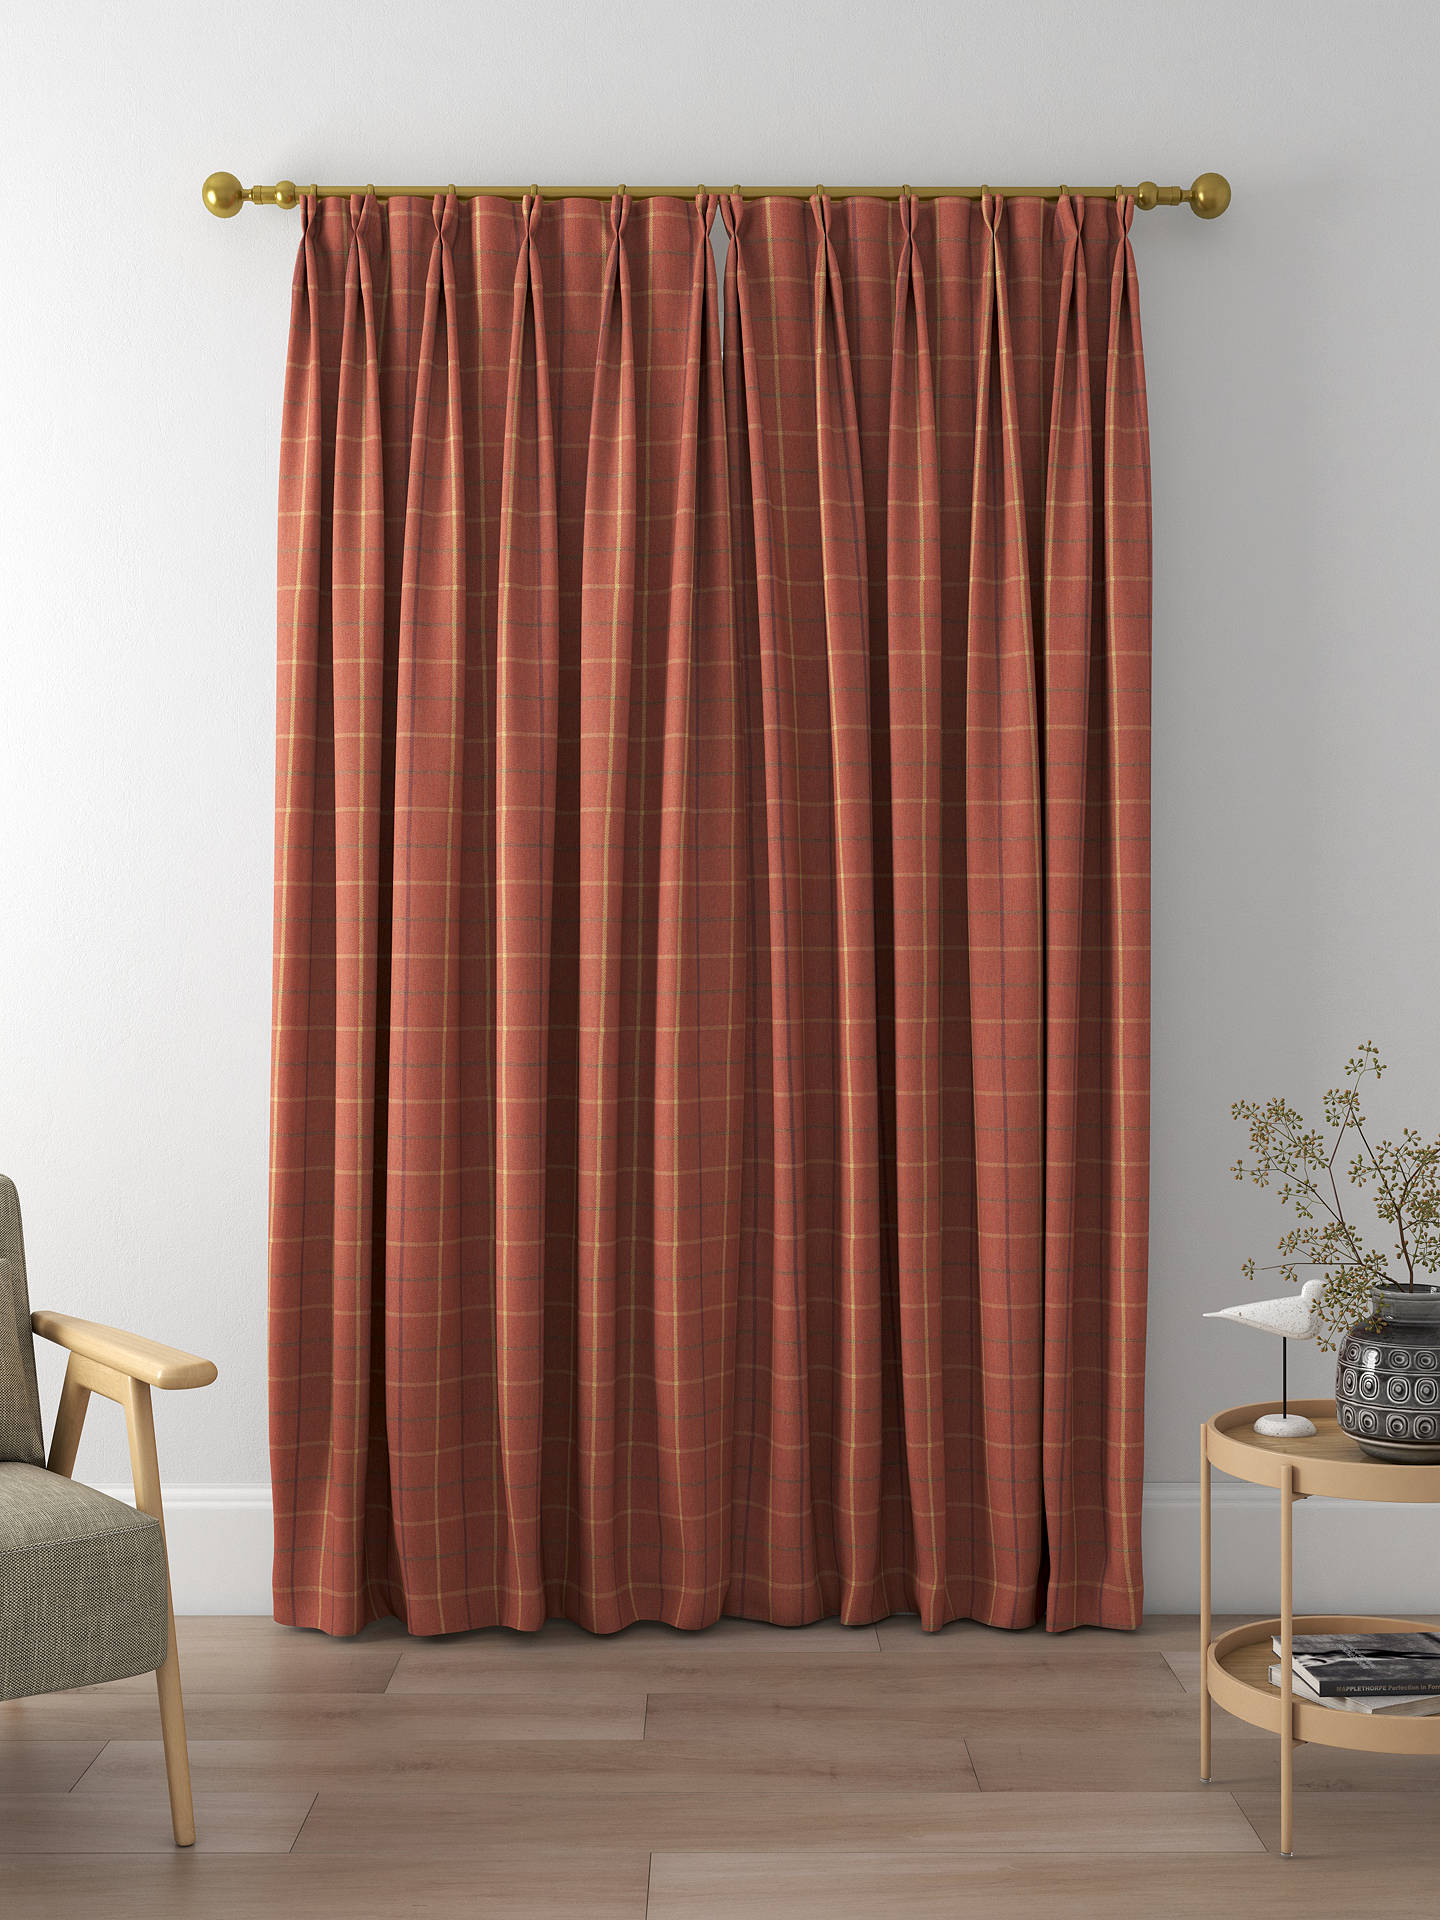 Prestigious Textiles Balmoral Made to Measure Curtains, Rustic